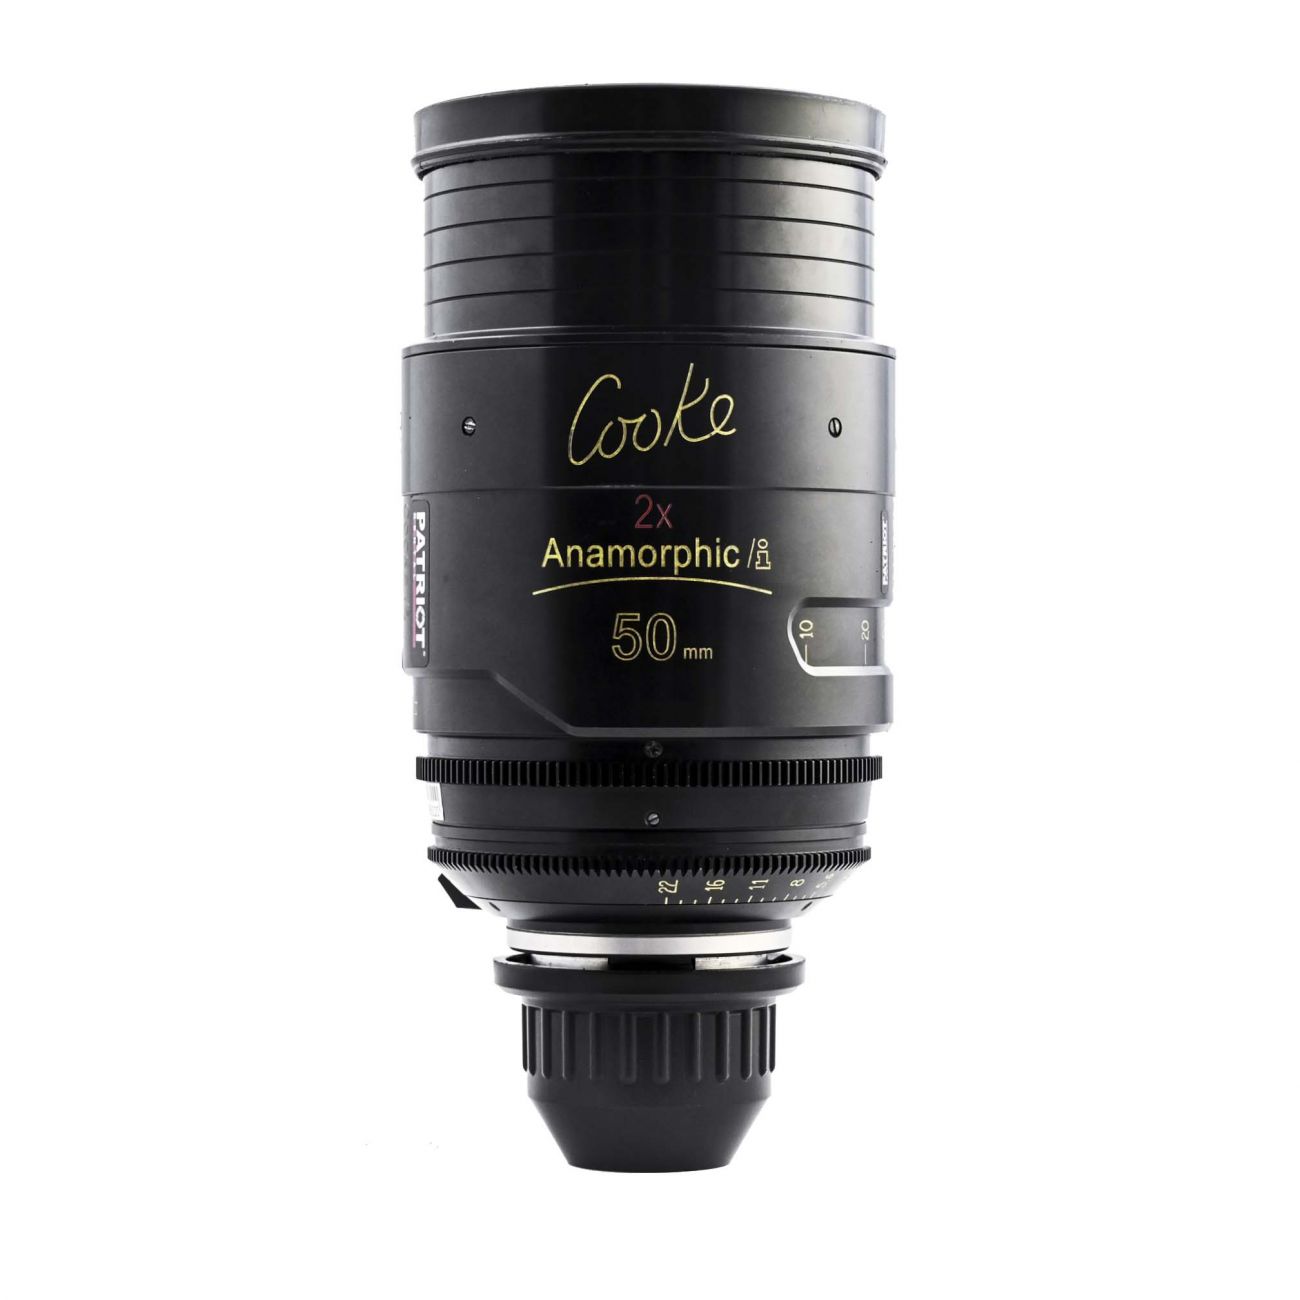 50mm COOKE ANAMORPHIC/I 2x lens T2.3